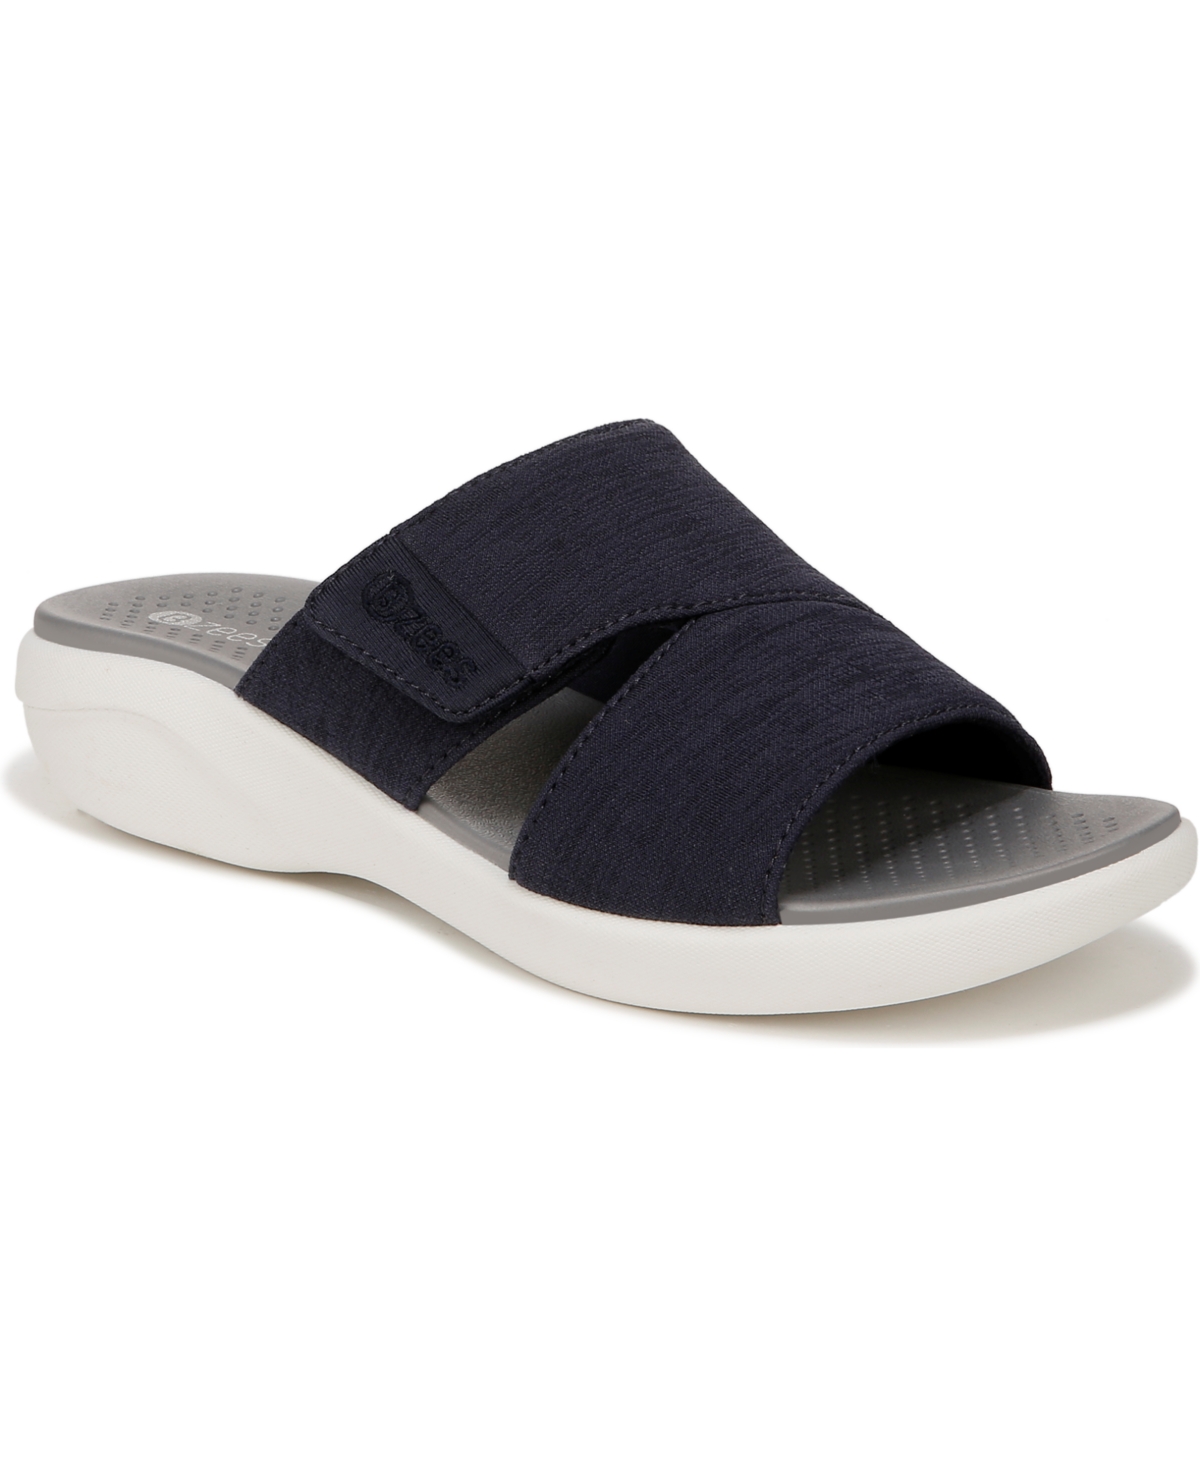 Carefree Washable Slide Sandals - Navy Blue Fabric